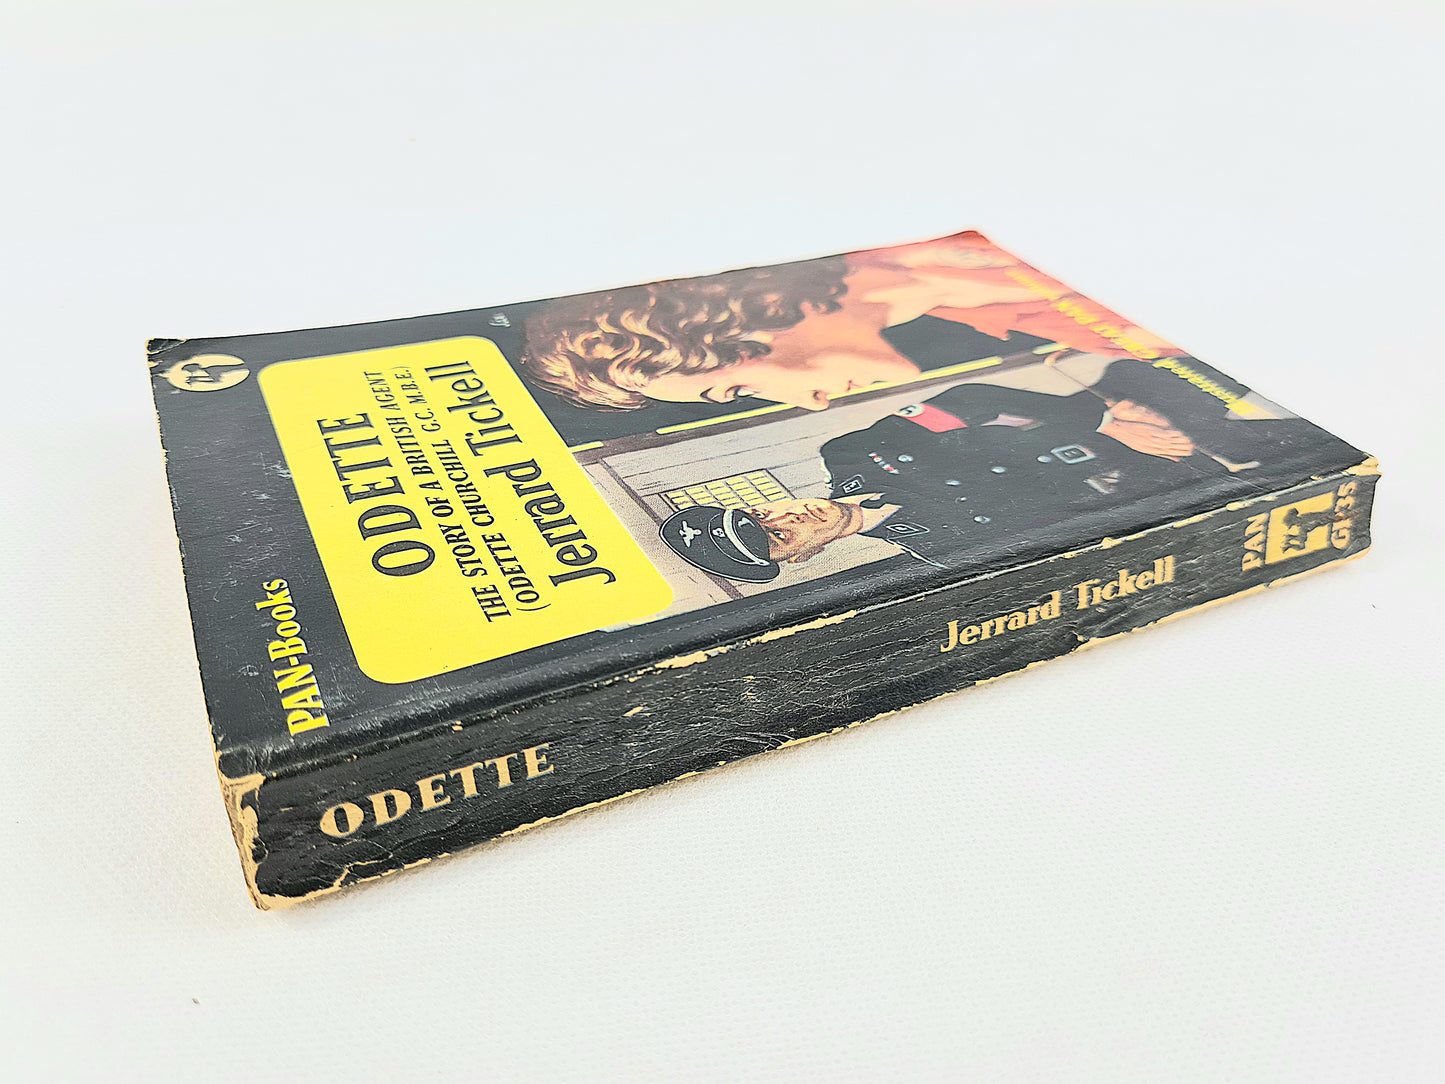 Odette by Jerrard Tickell. Pan Books GP35, vintage paperback